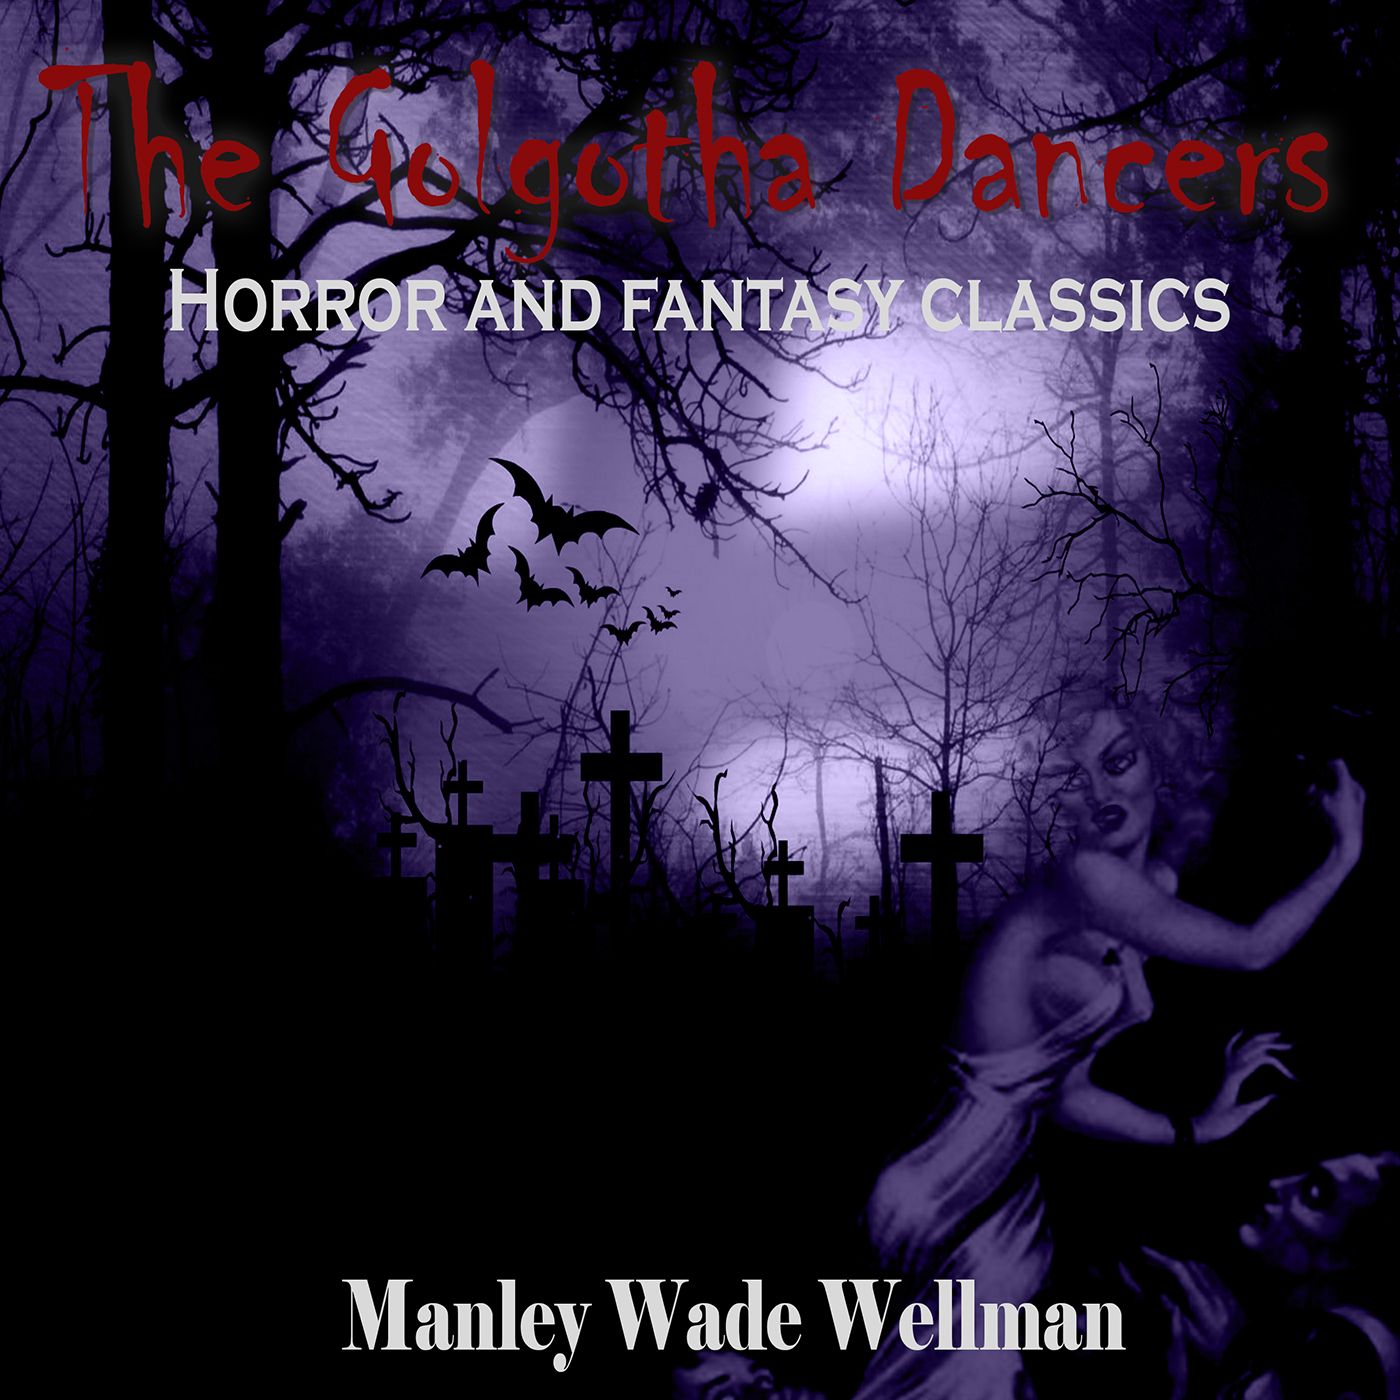 The Golgotha Dancers, ljudbok av Manly Wade Wellman